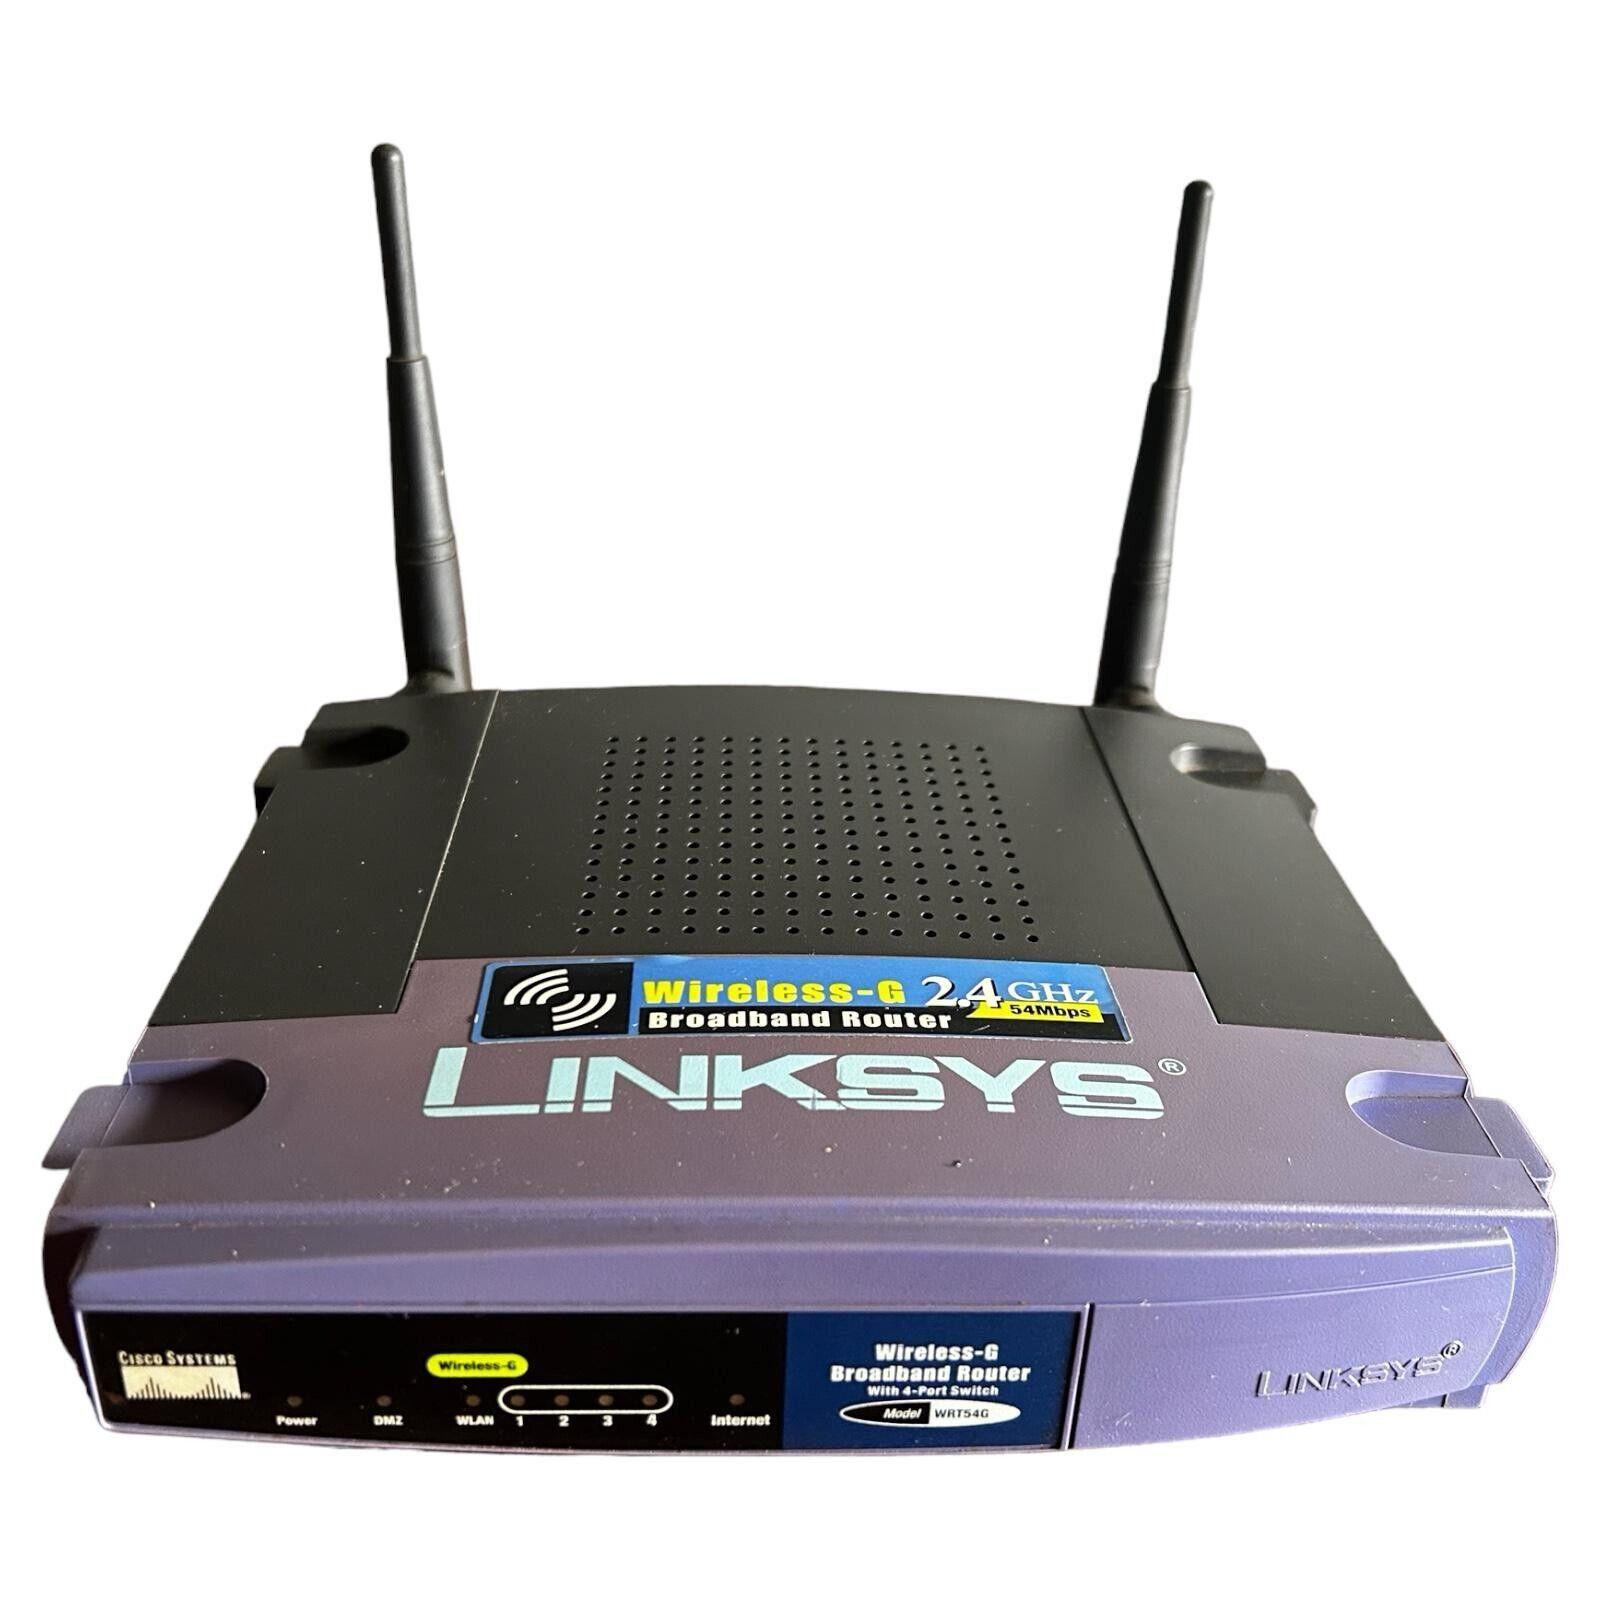 Linksys Wireless-G Broadband Router 2.4 GHz 54 Mbps 4-Port WRT54G Ver. 2